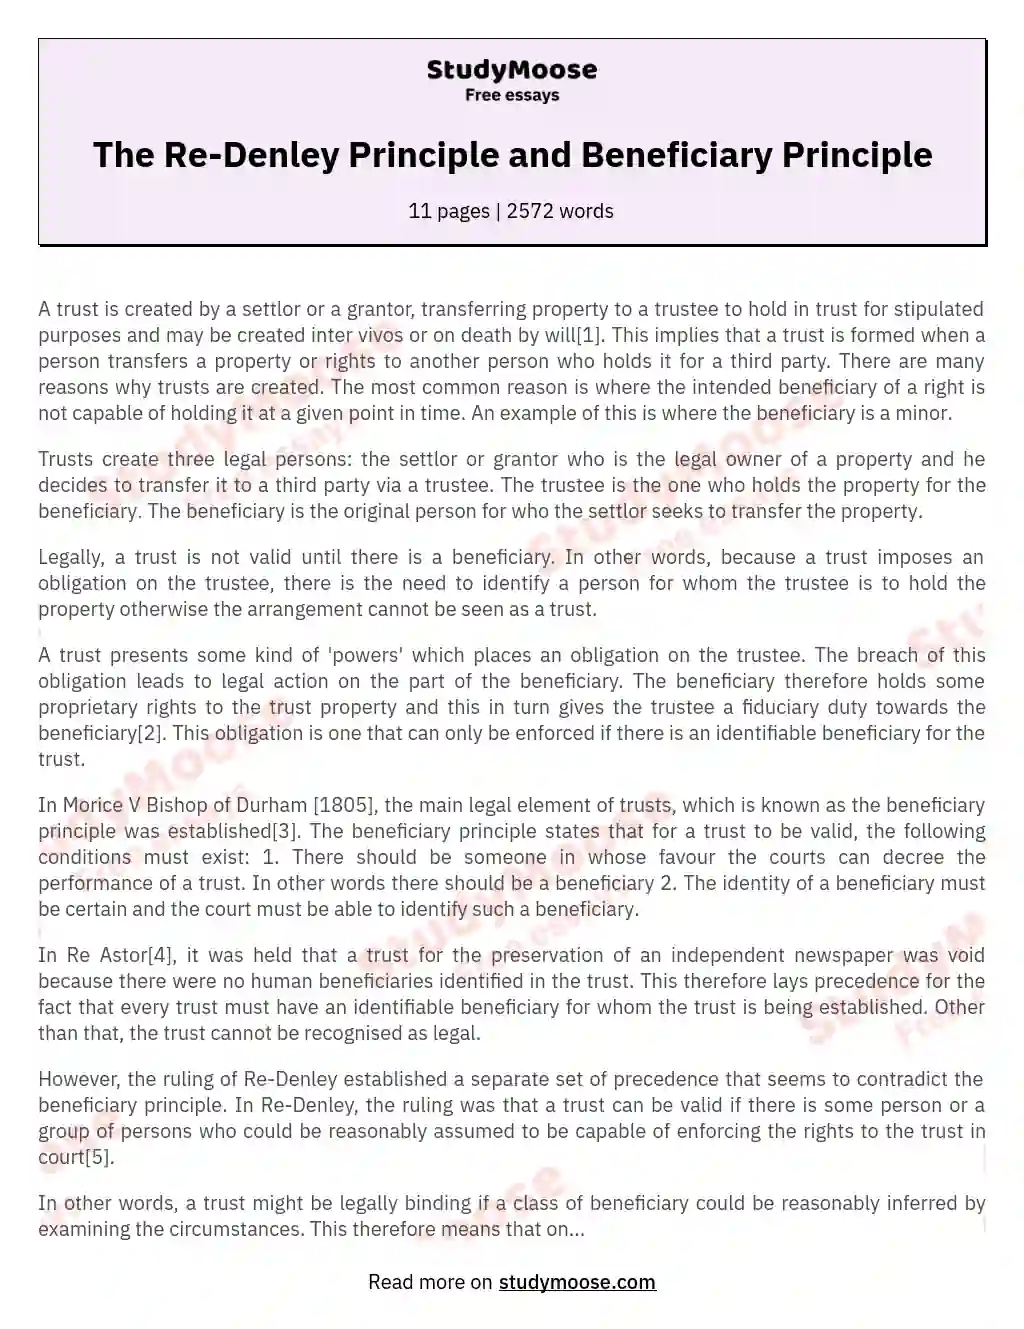 The Re-Denley Principle and Beneficiary Principle essay